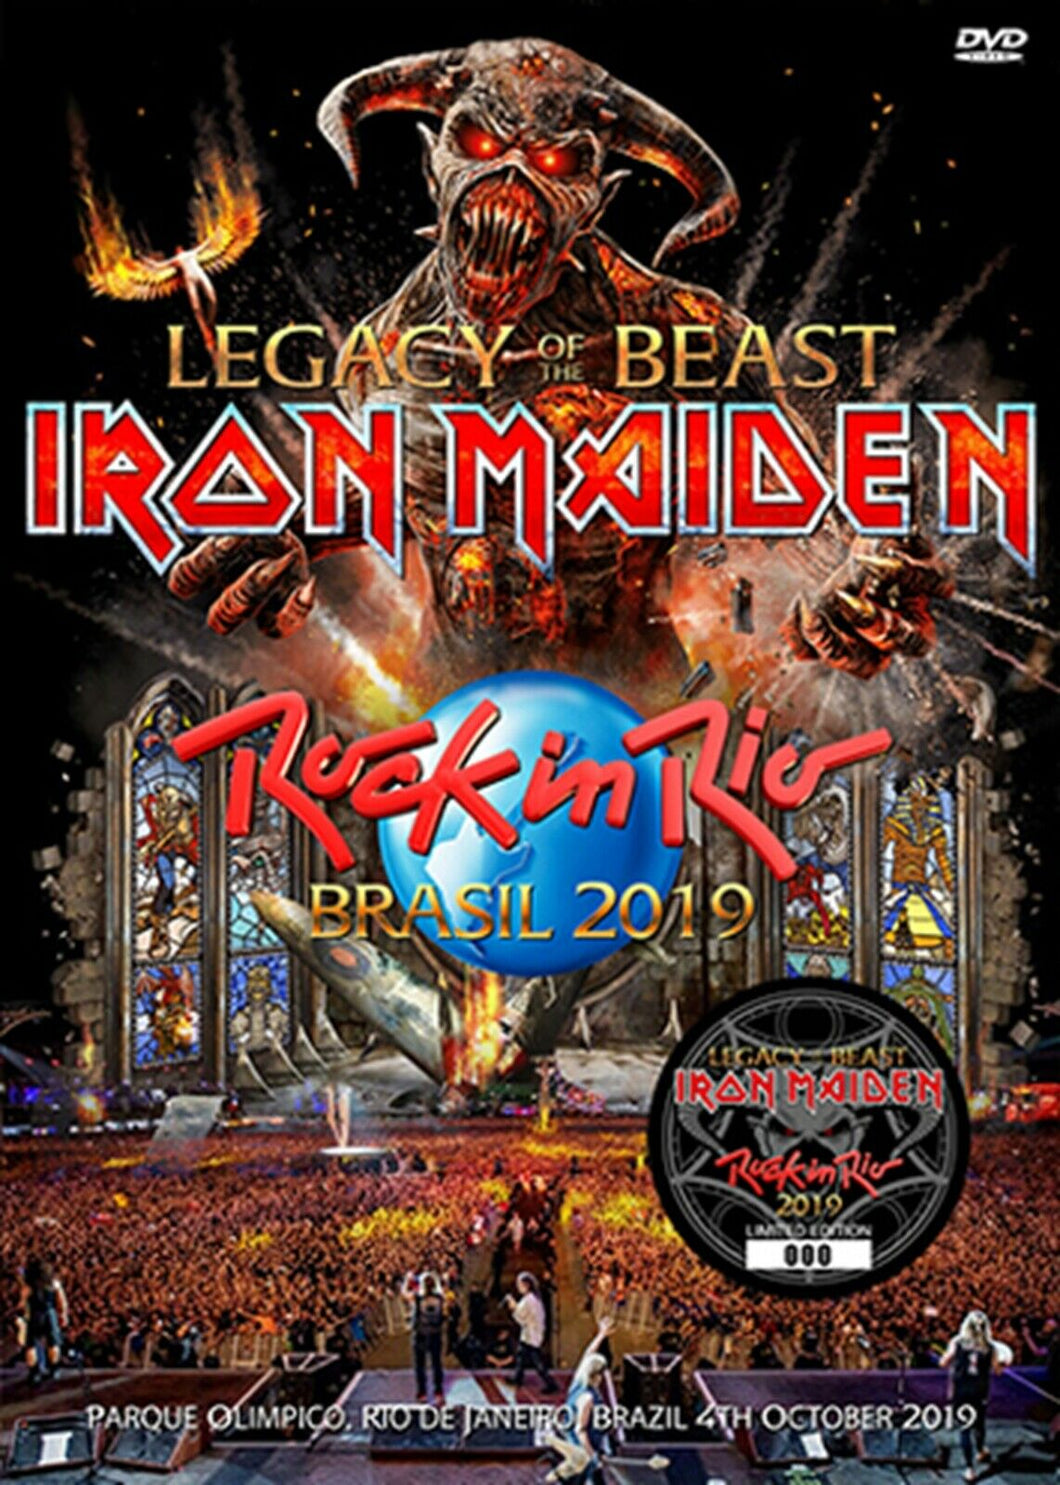 Iron Maiden Rock In Rio Brasil 2019 4th October DVD 1 Disc Music  F/S